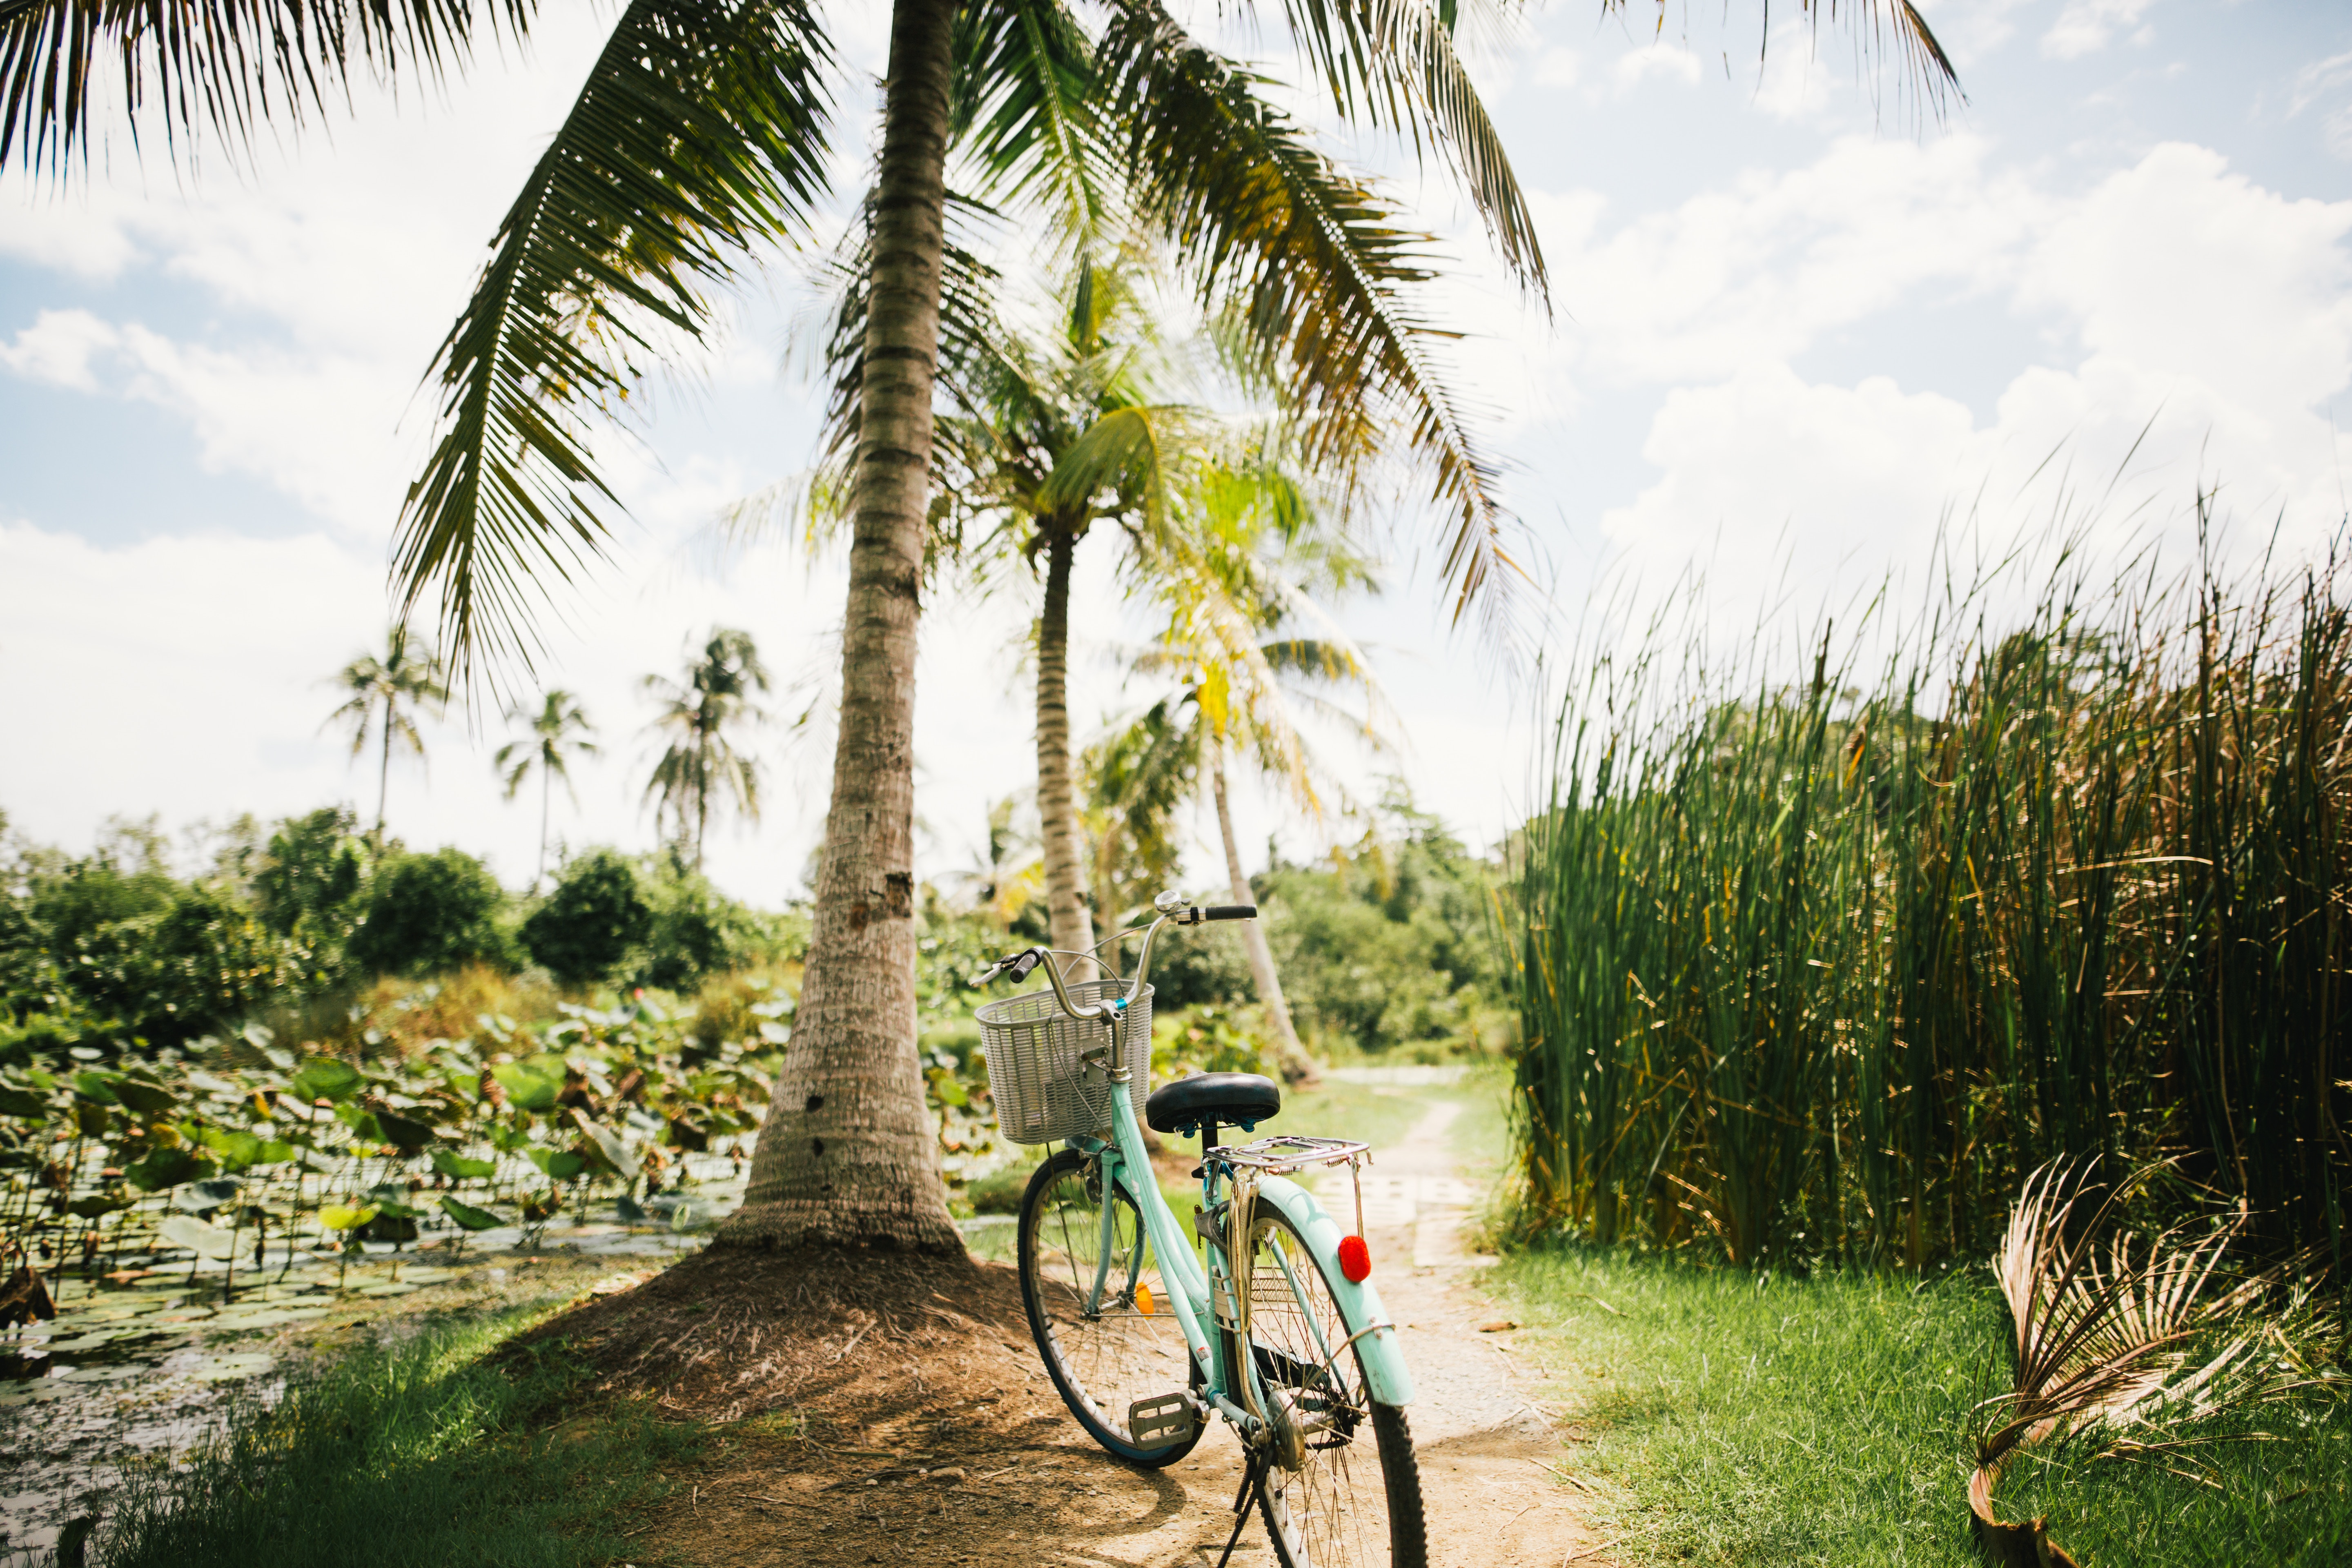 tropics, palms, miscellanea, miscellaneous, sunlight, bicycle QHD